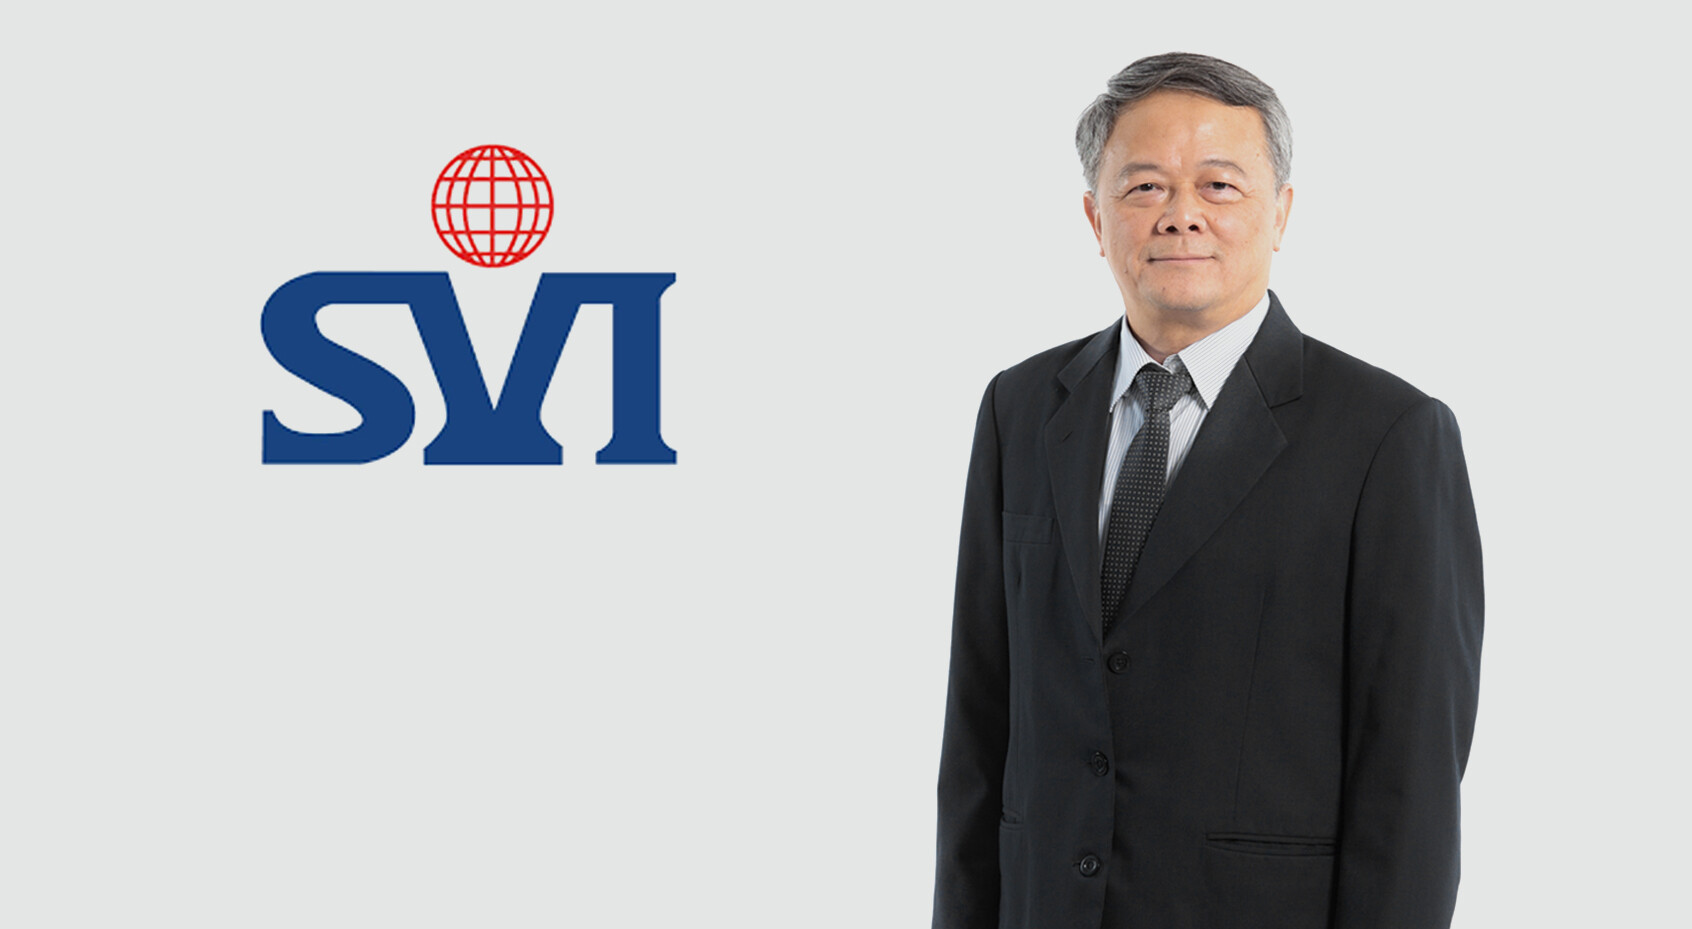 SVI ซื้อกิจการ บริษัทโทโฮกุ ไพโอเนียร์ (ประเทศไทย) จำกัด ผู้เชี่ยวชาญการผลิตอุปกรณ์สำหรับชิ้นส่วนอิเล็กทรอนิกส์ในอุตสาหกรรมยานยนต์